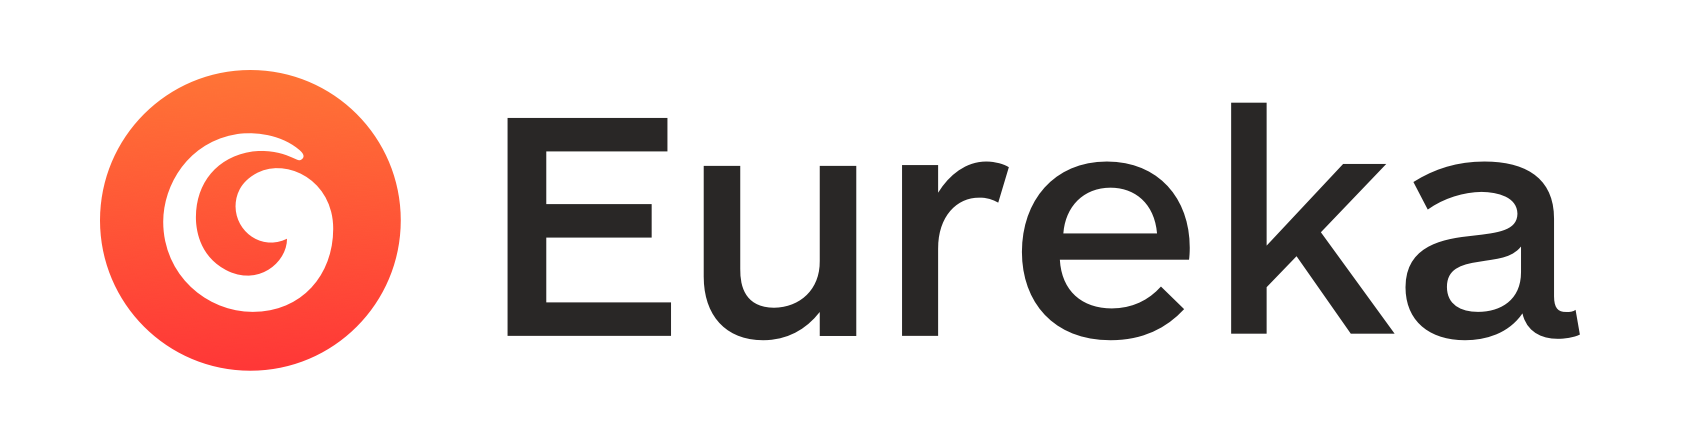 Eureka Certification a training organization